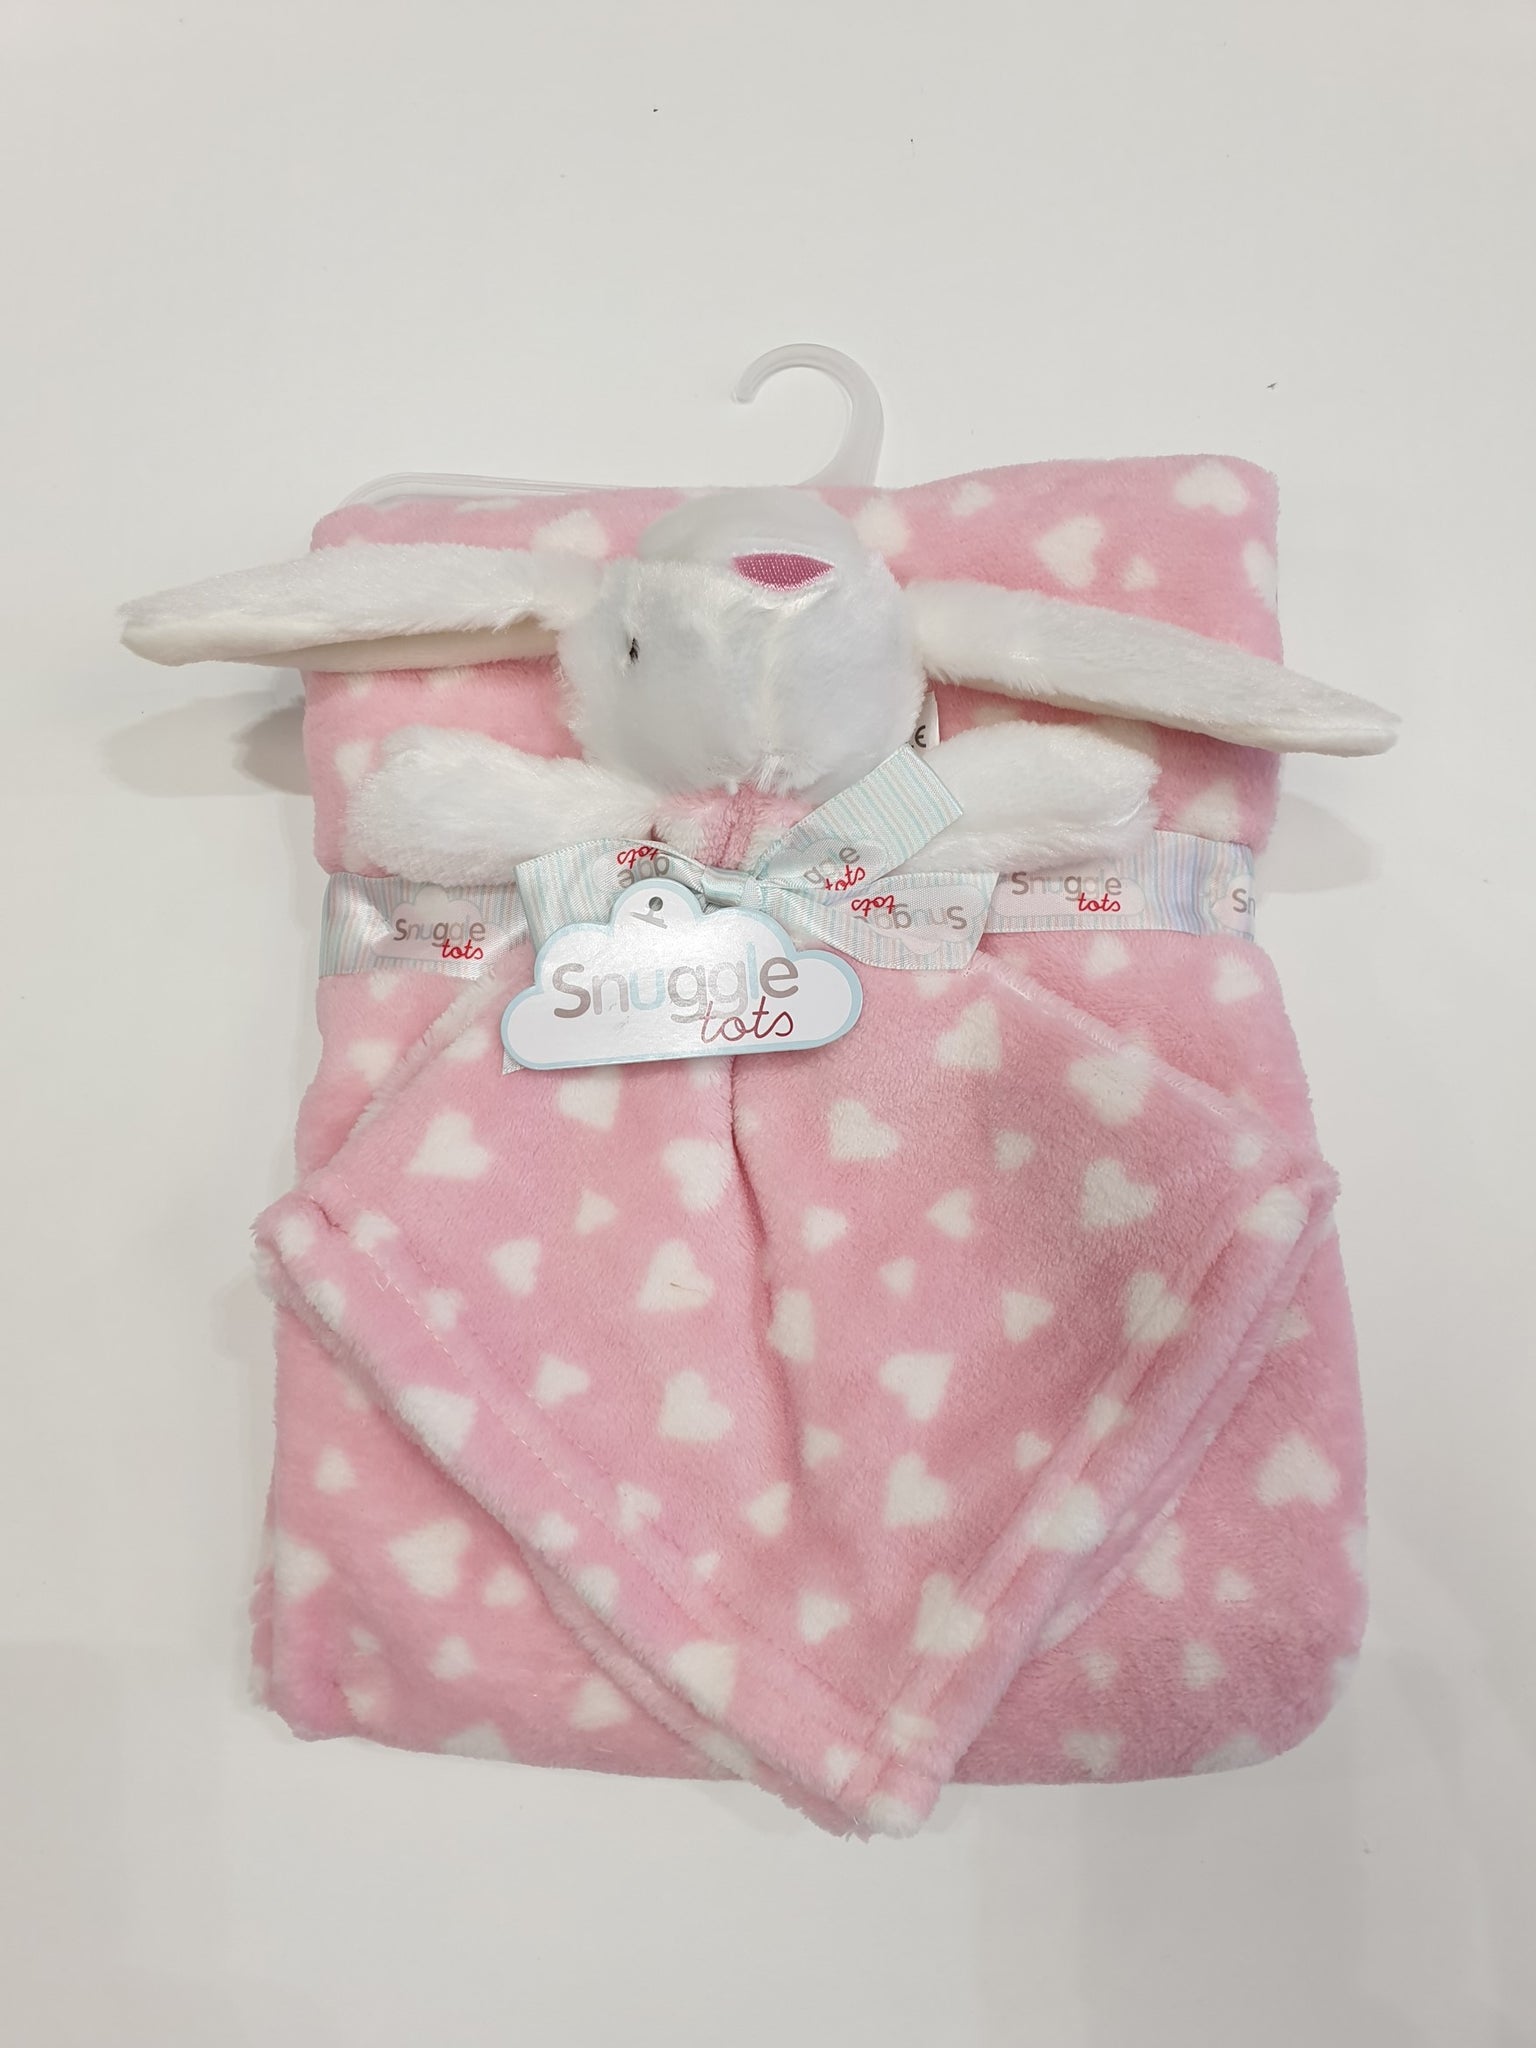 Snuggle Tots Blanket and Comforter Set S19629 Pink